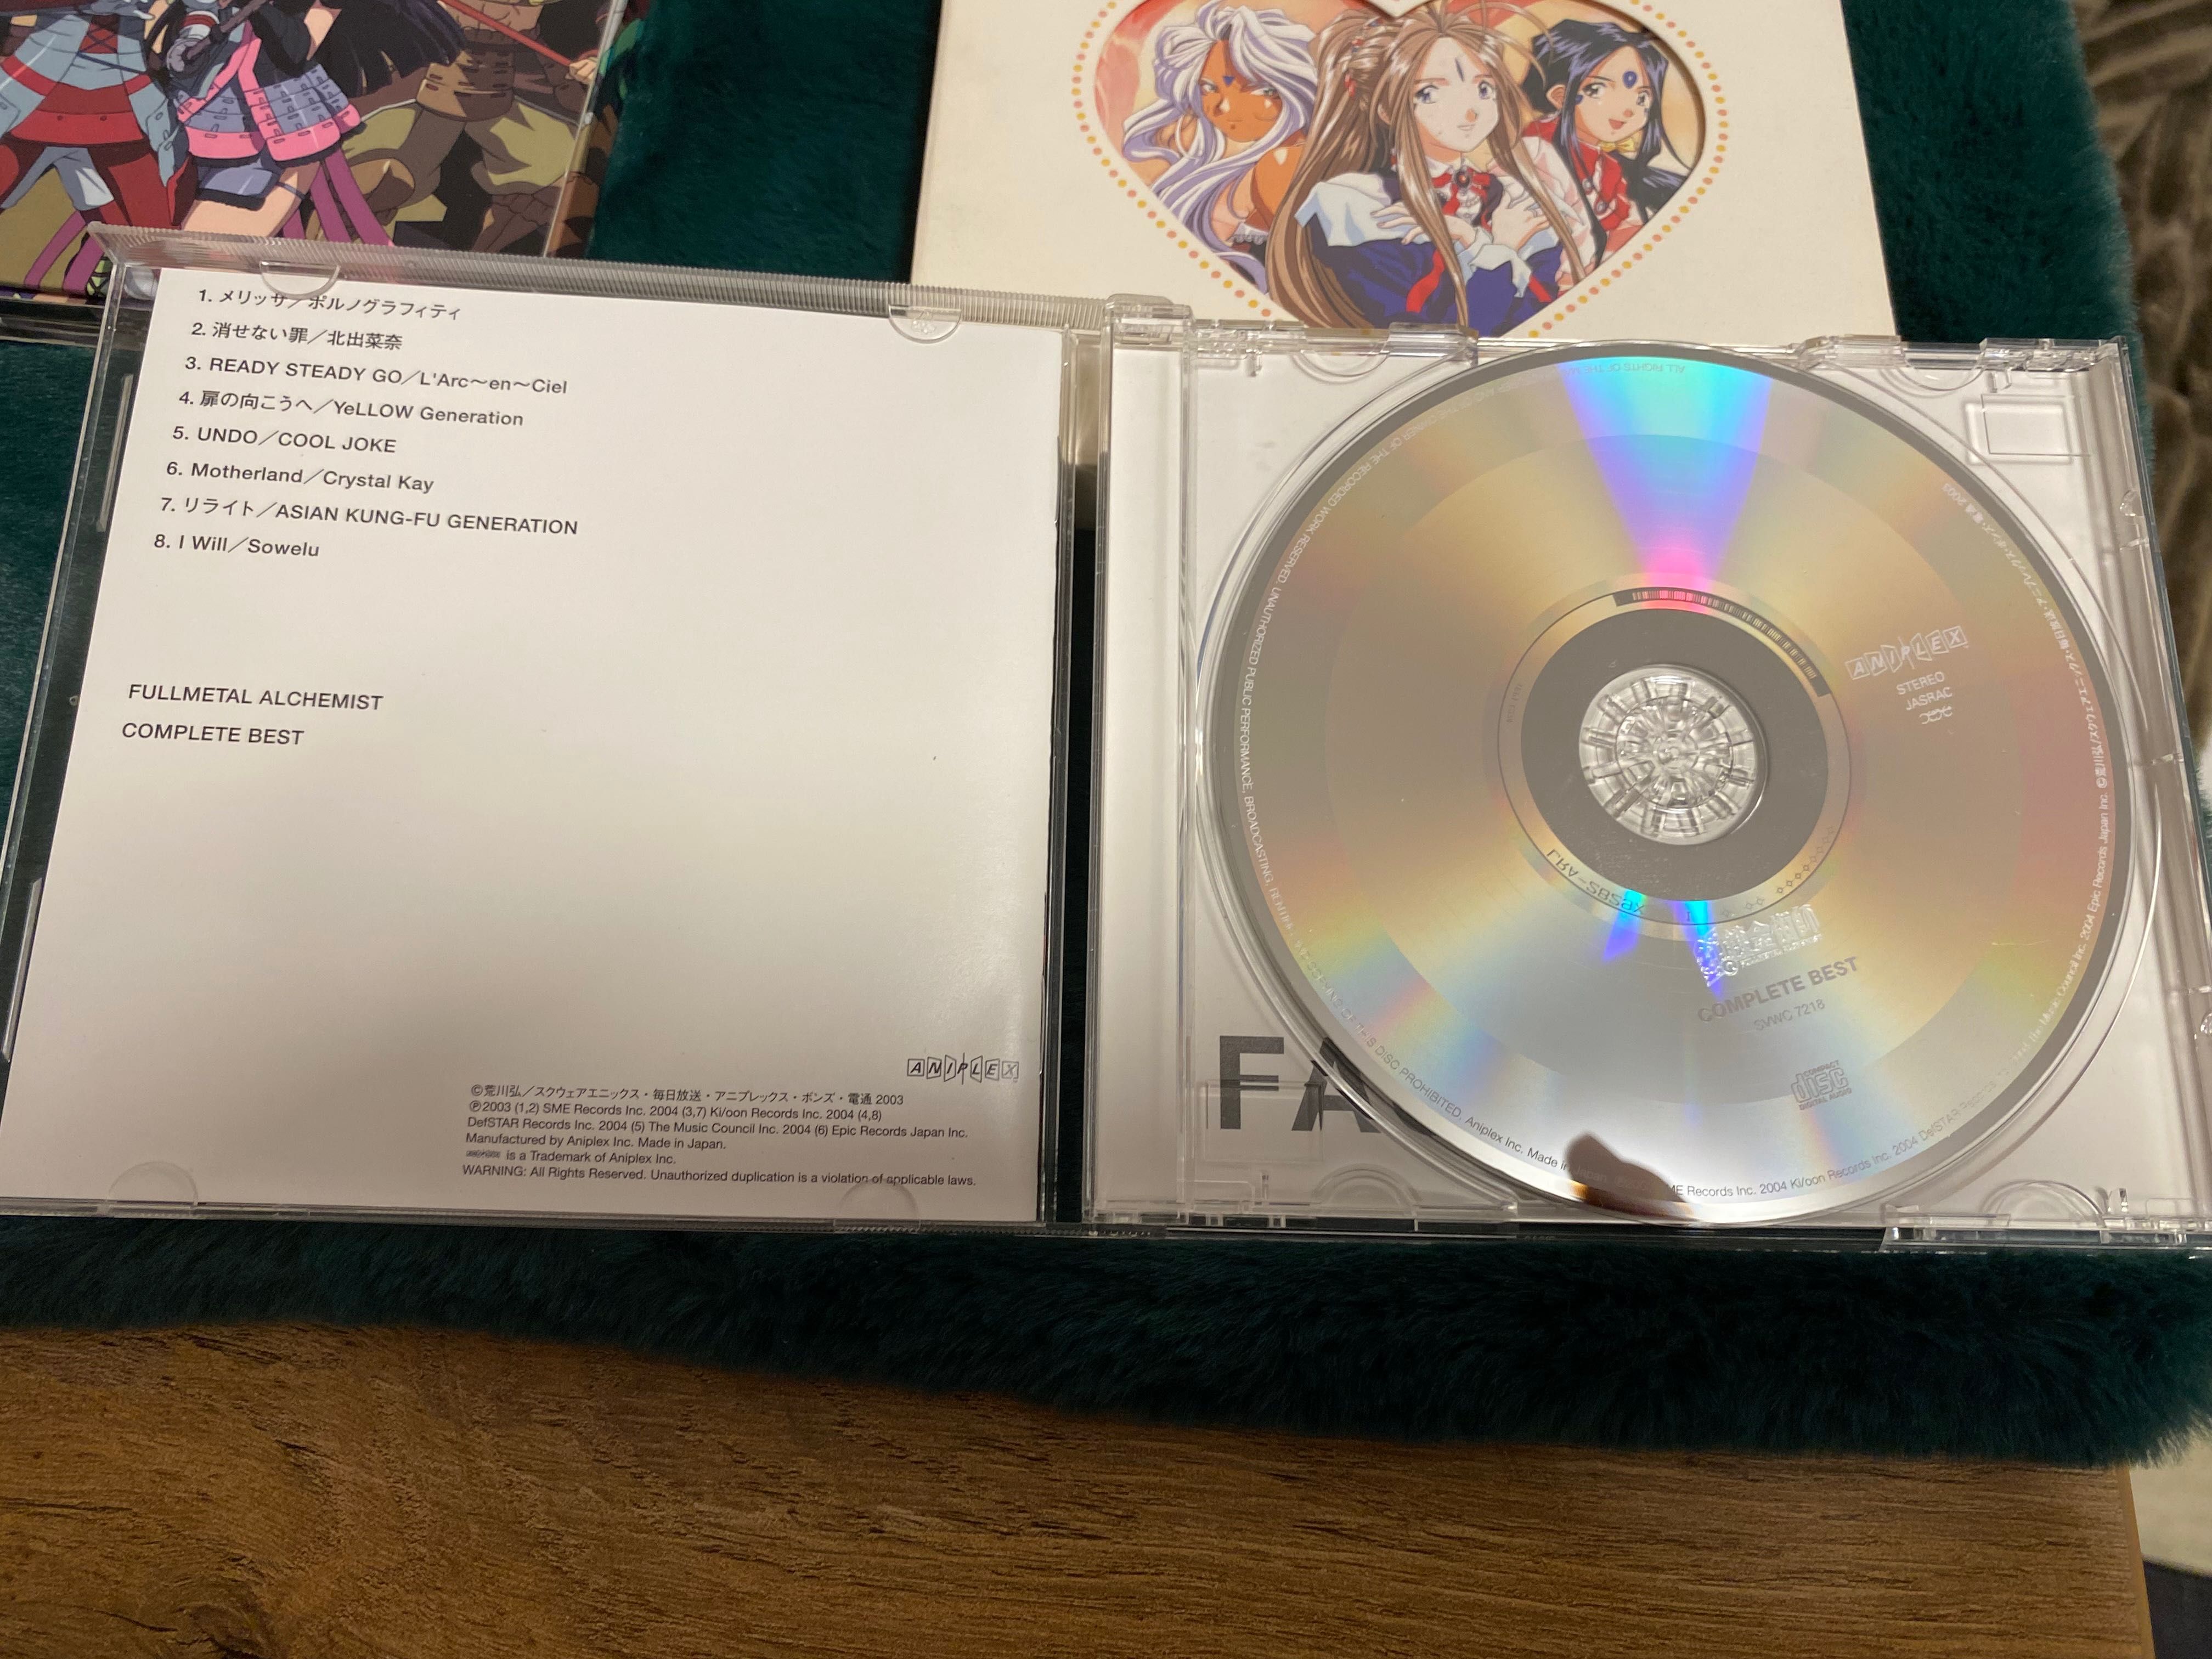 muzyka anime japonia Fullmetal Alchemist Complete Best cd bdb komplet